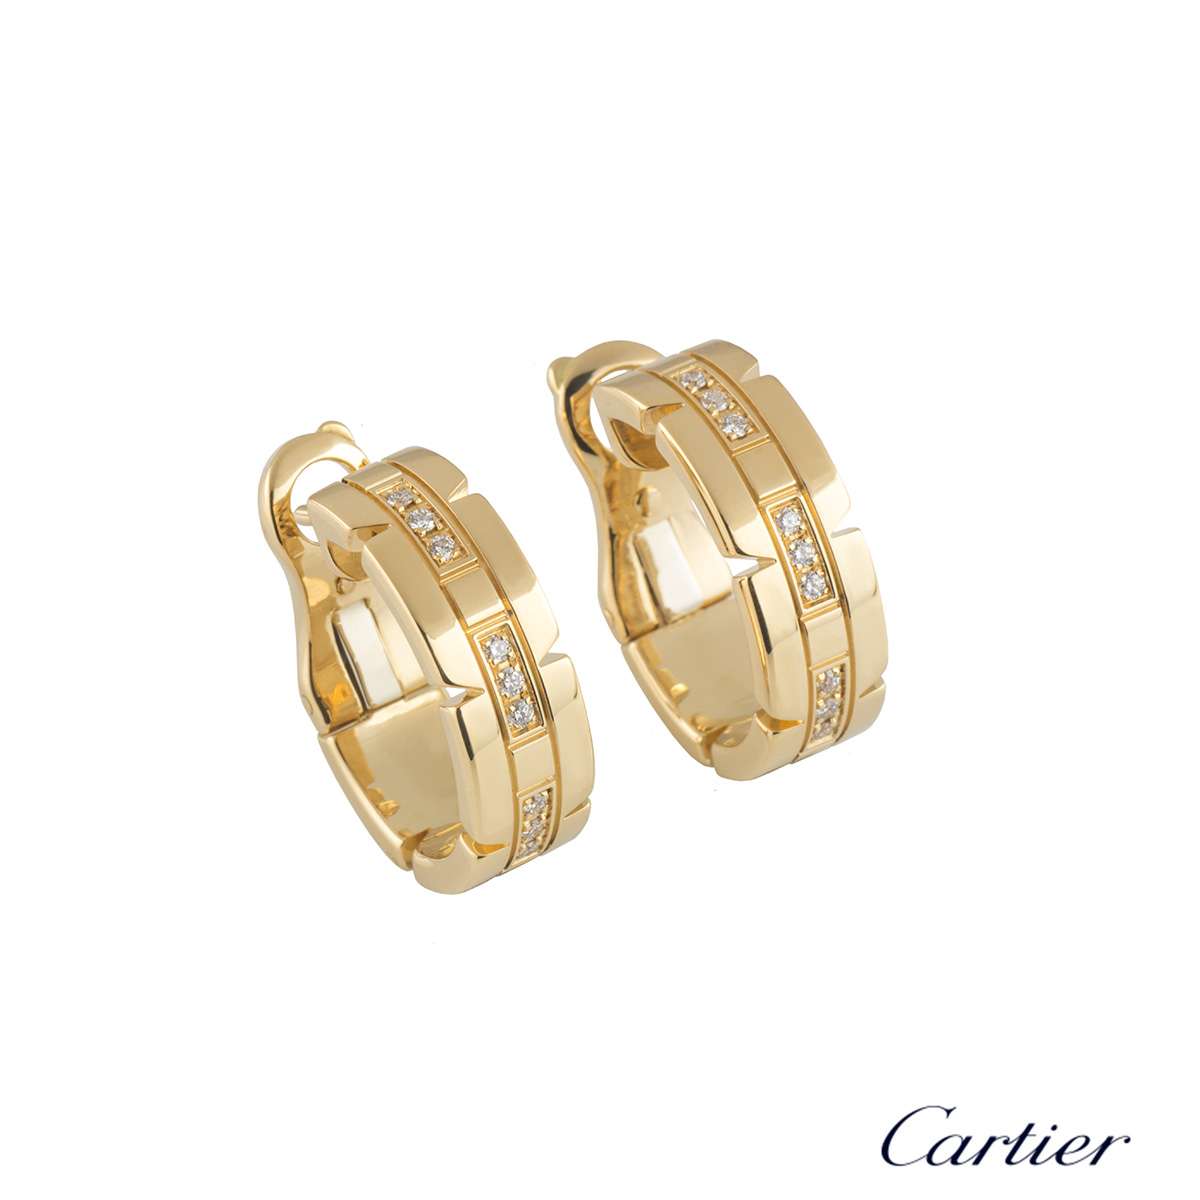 cartier tank francaise earrings